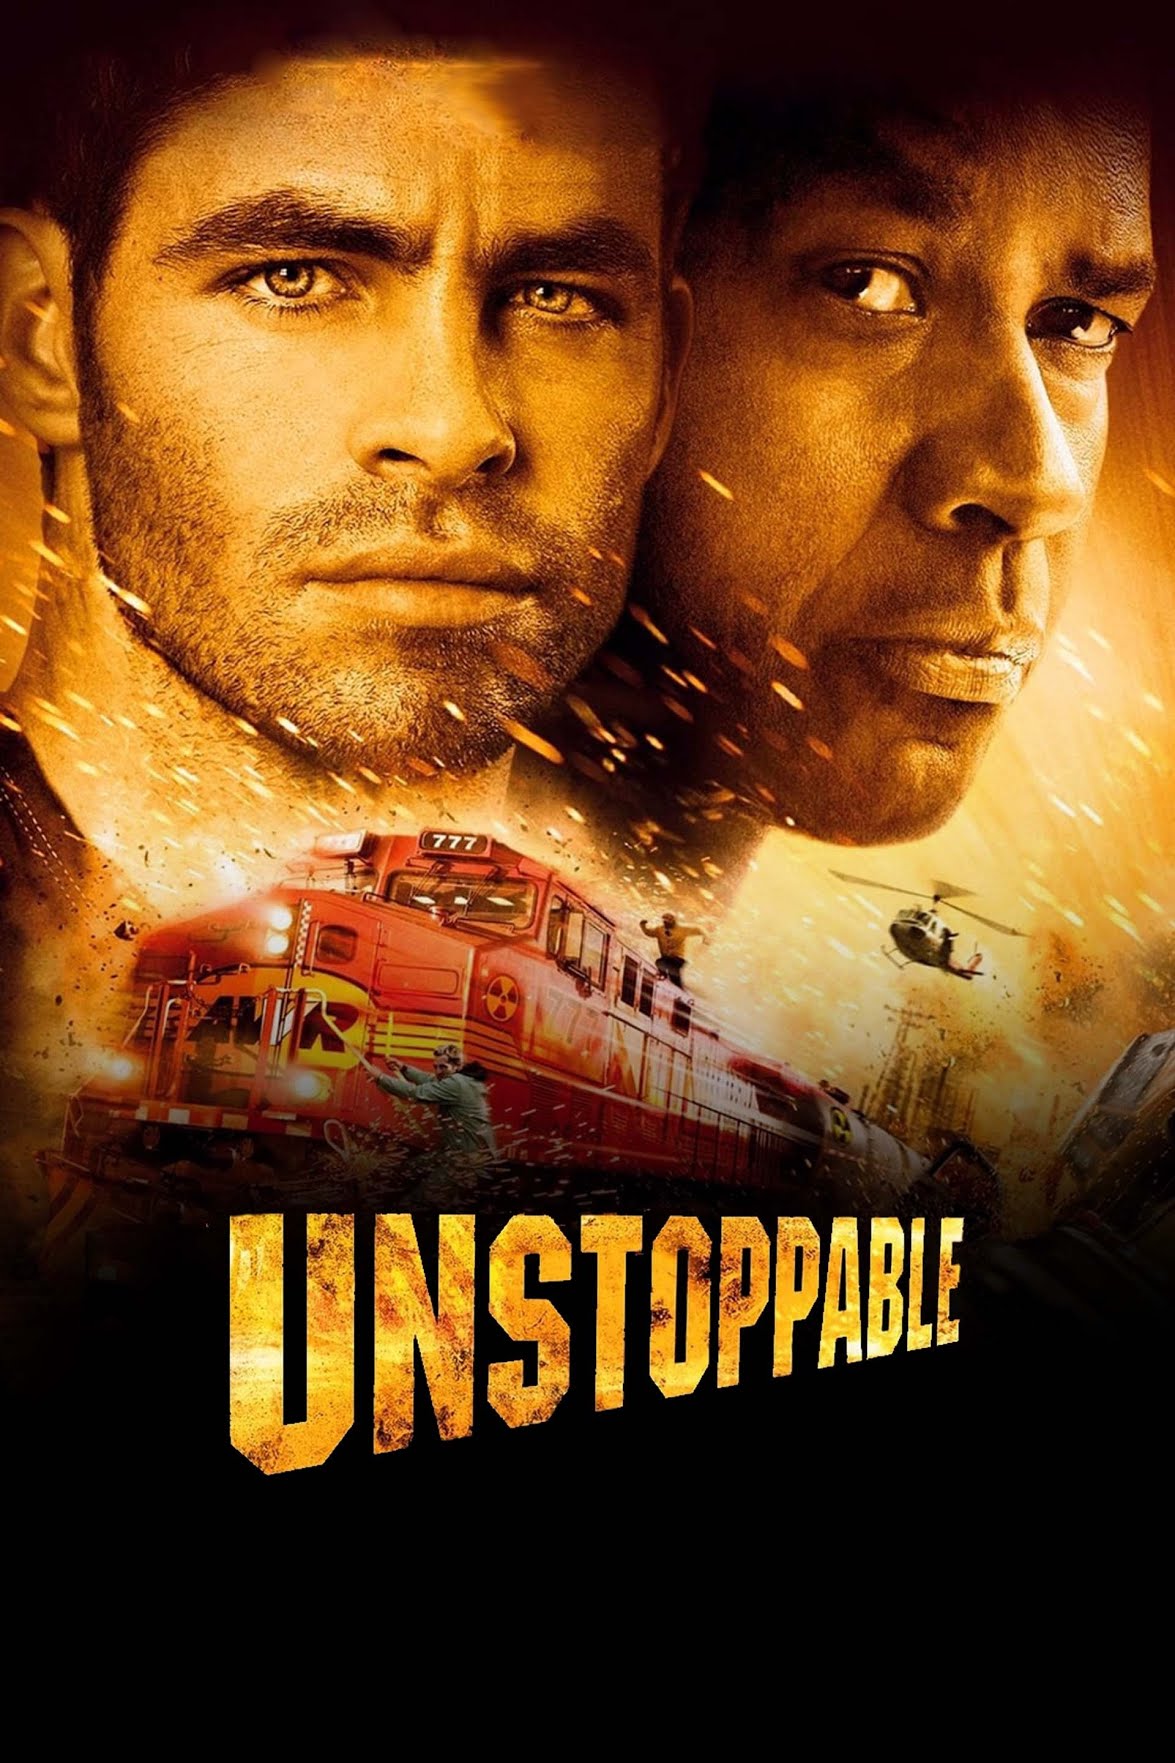 [MINI-HD] Unstoppable (2010) ด่วนวินาศ หยุดไม่อยู่ [1080p] [พากย์ไทย 5.1 + เสียงอังกฤษ] [บรรยายไทย + อังกฤษ] [เสียงไทย + ซับไทย] [DOSYAUPLOAD]